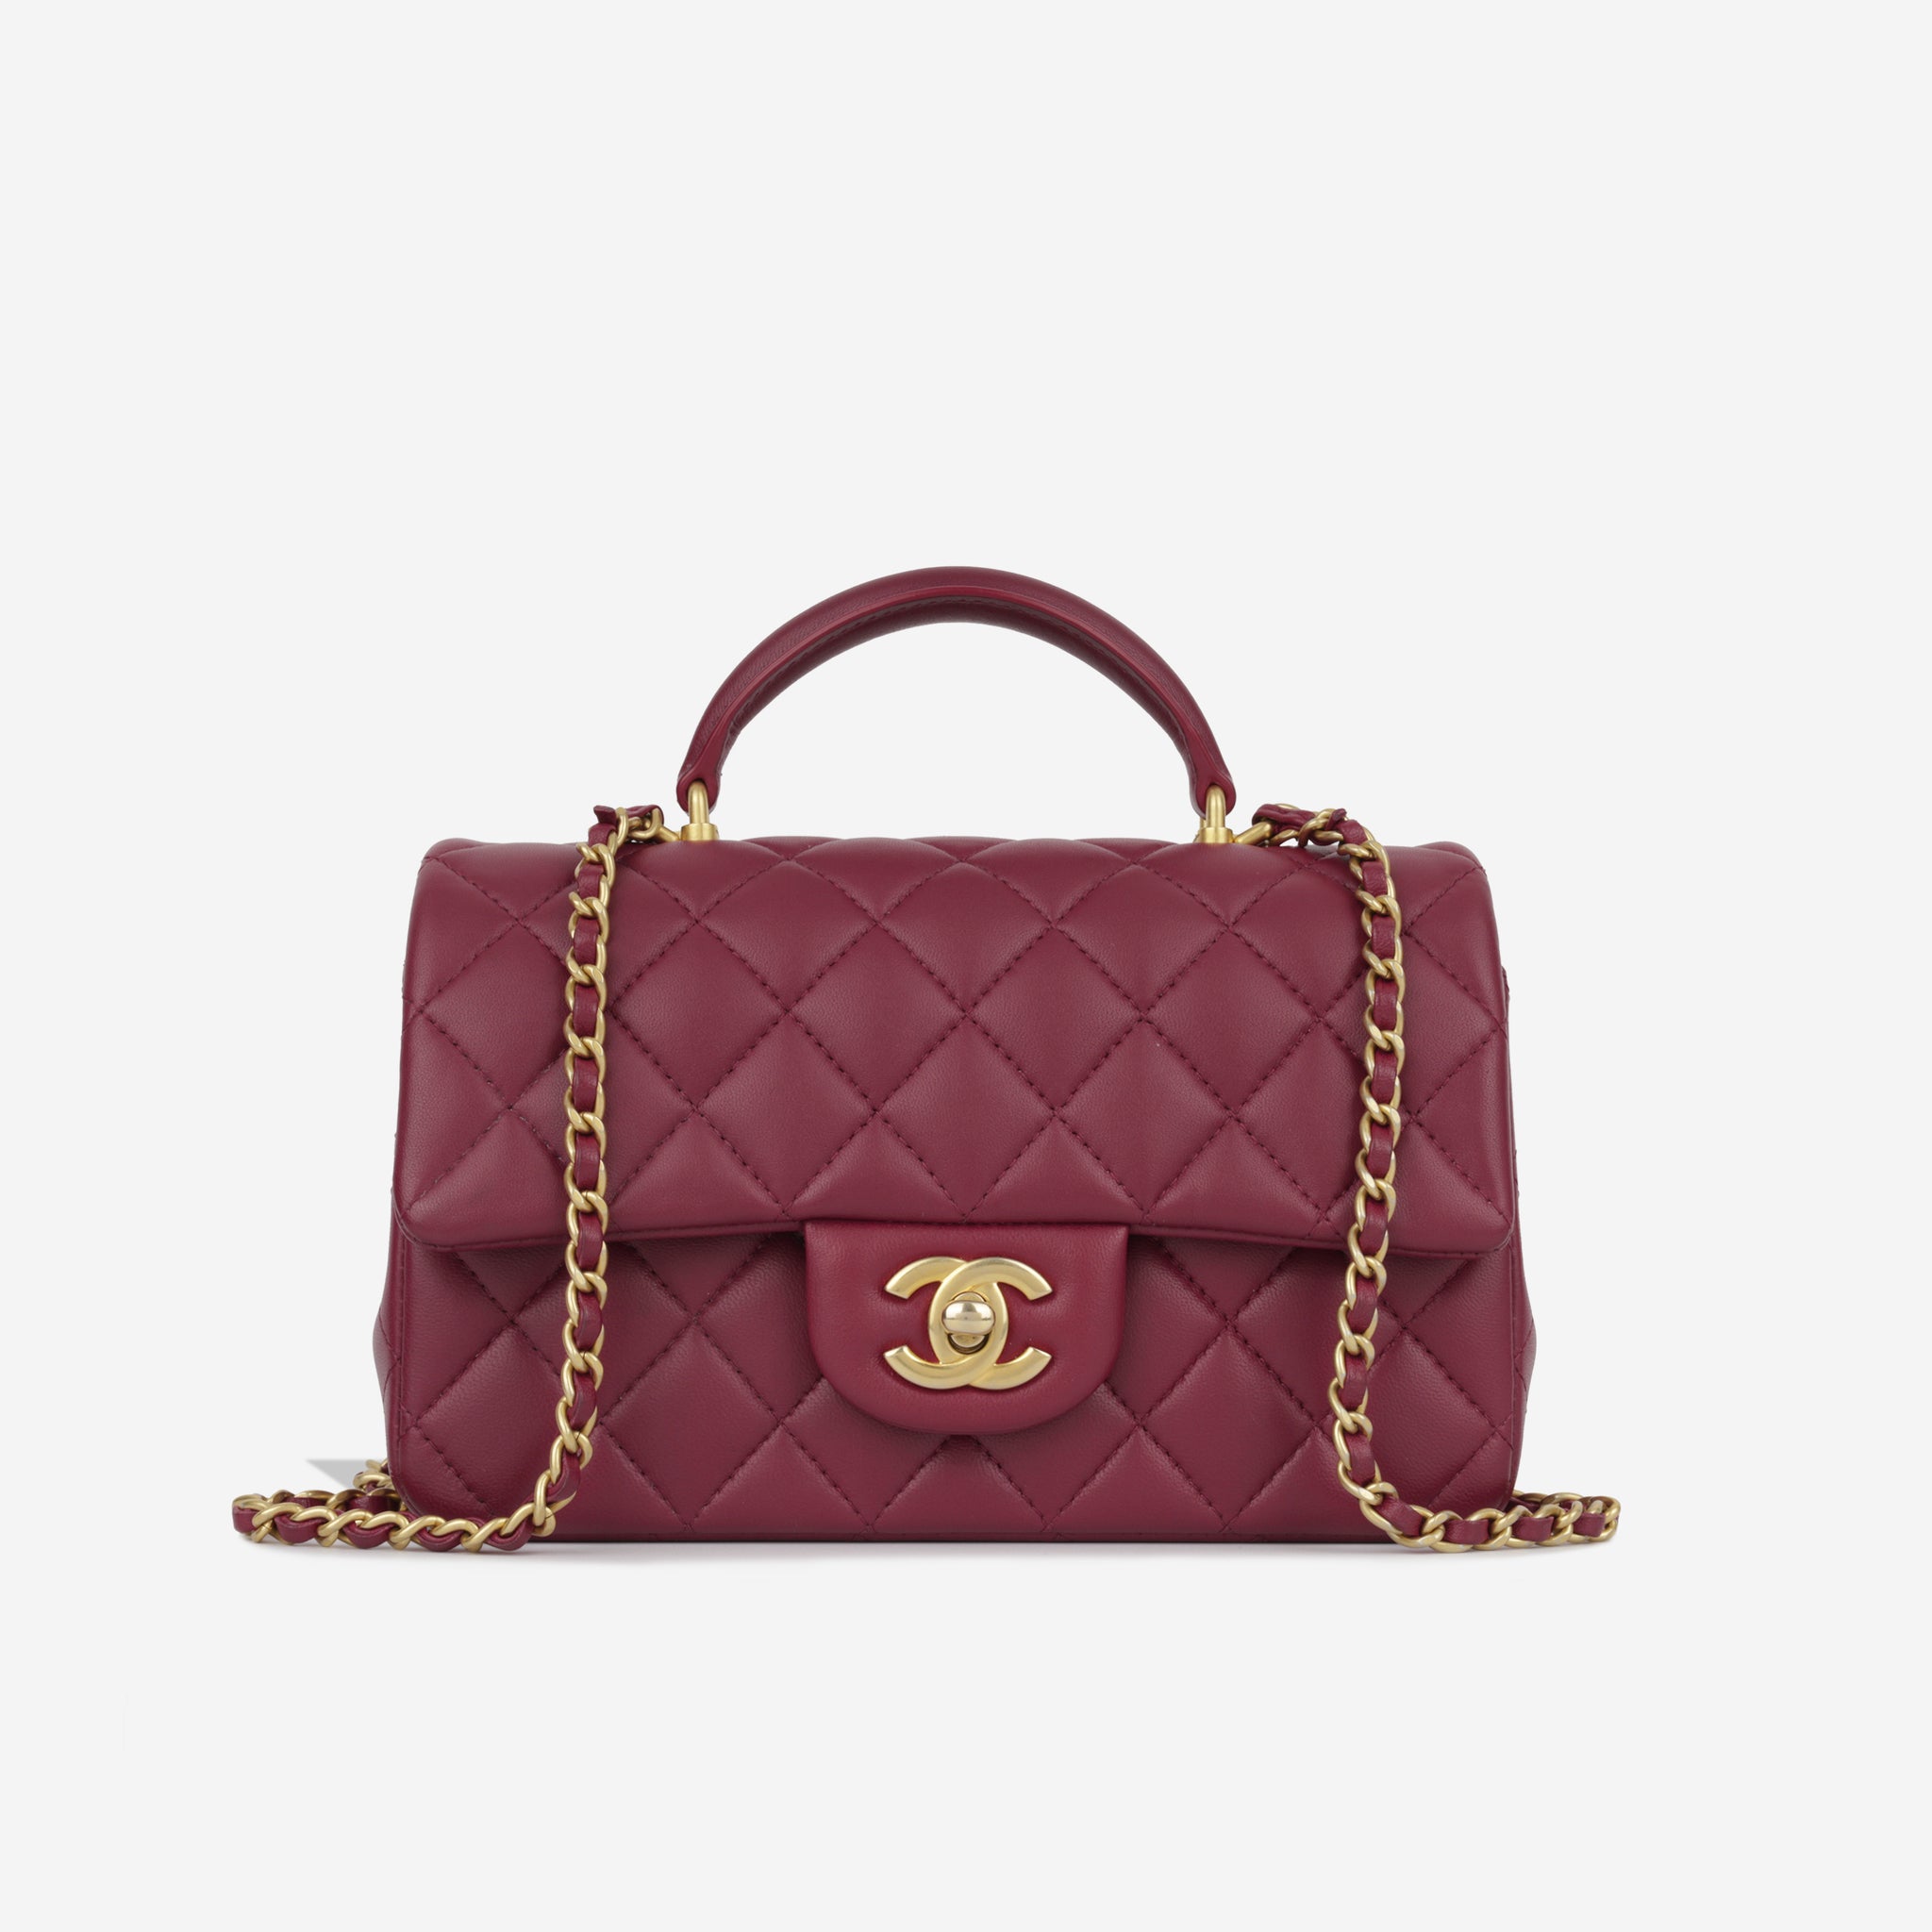 Chanel - Mini Rectangular Top Handle Classic Flap Bag - Burgundy Lambskin -  GHW - Excellent Condition